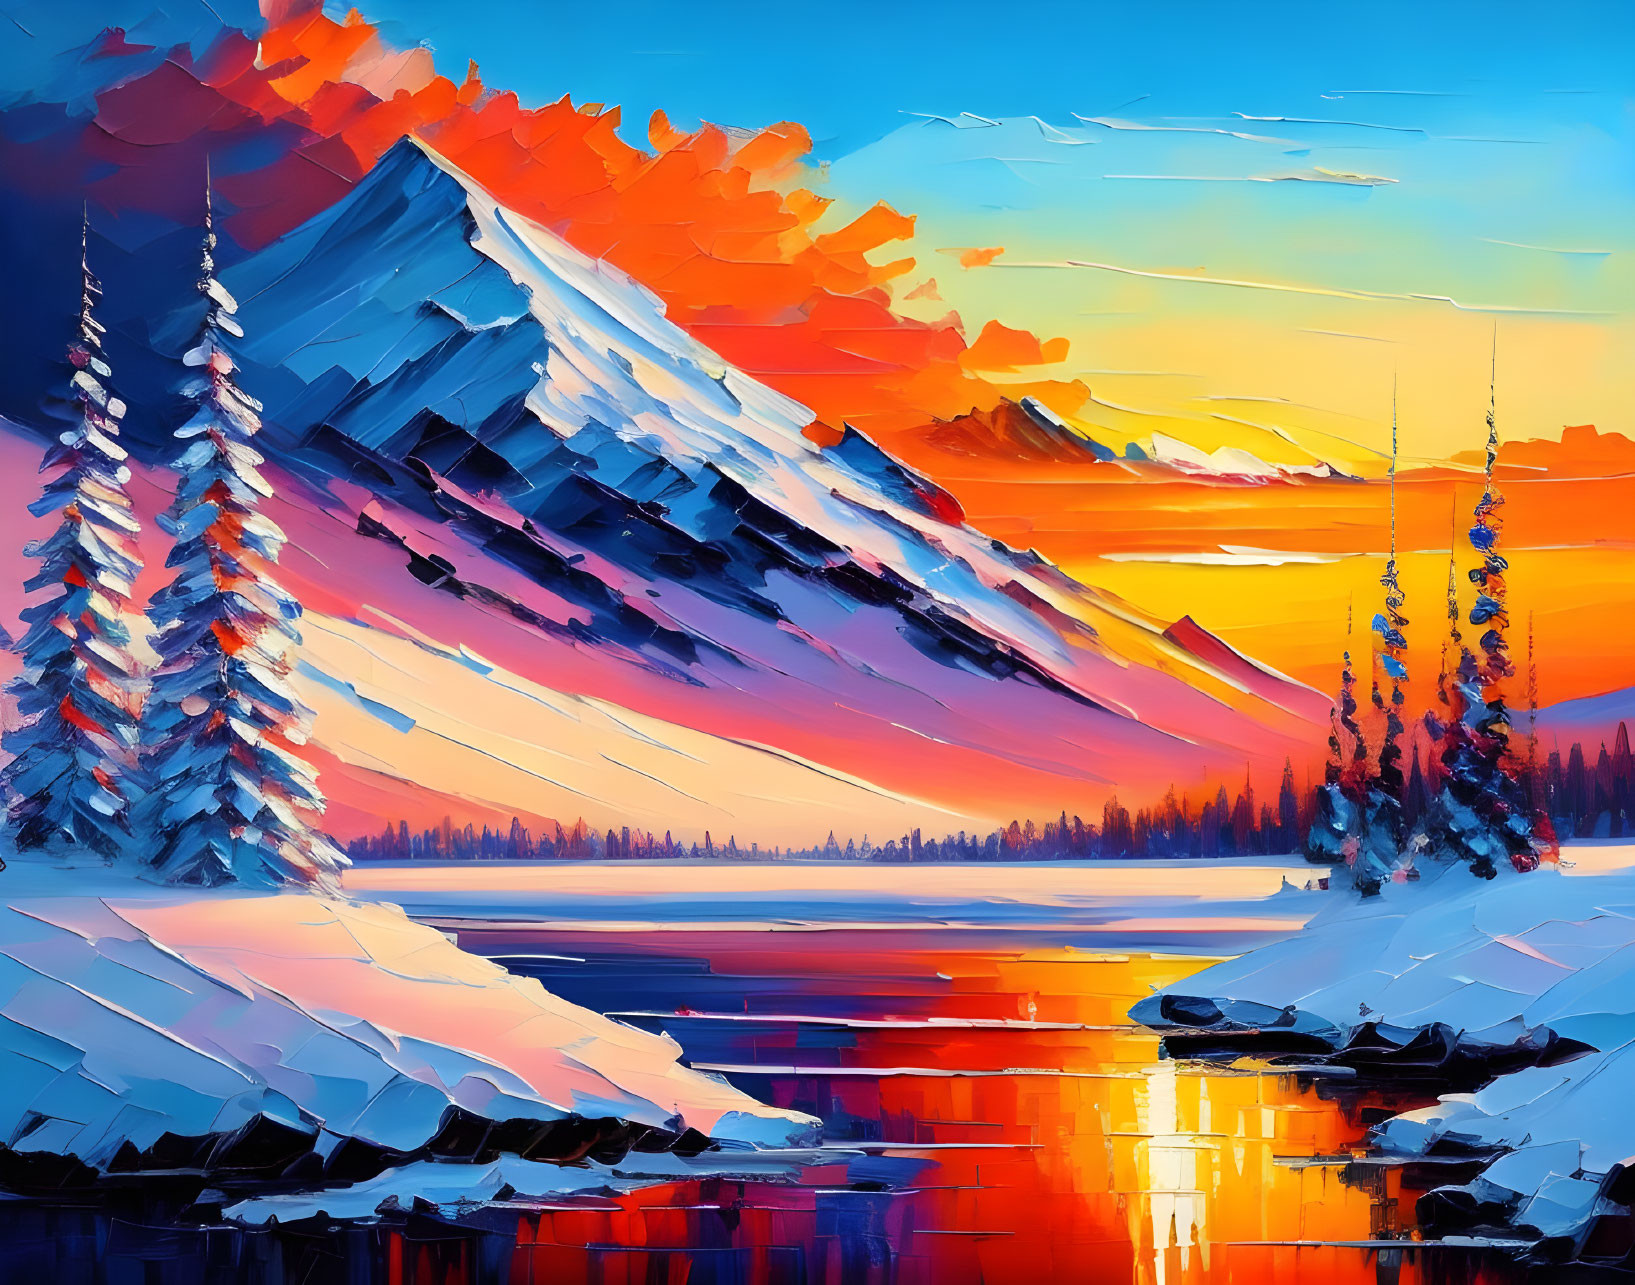 Snow-capped mountain range and serene lake under sunset sky